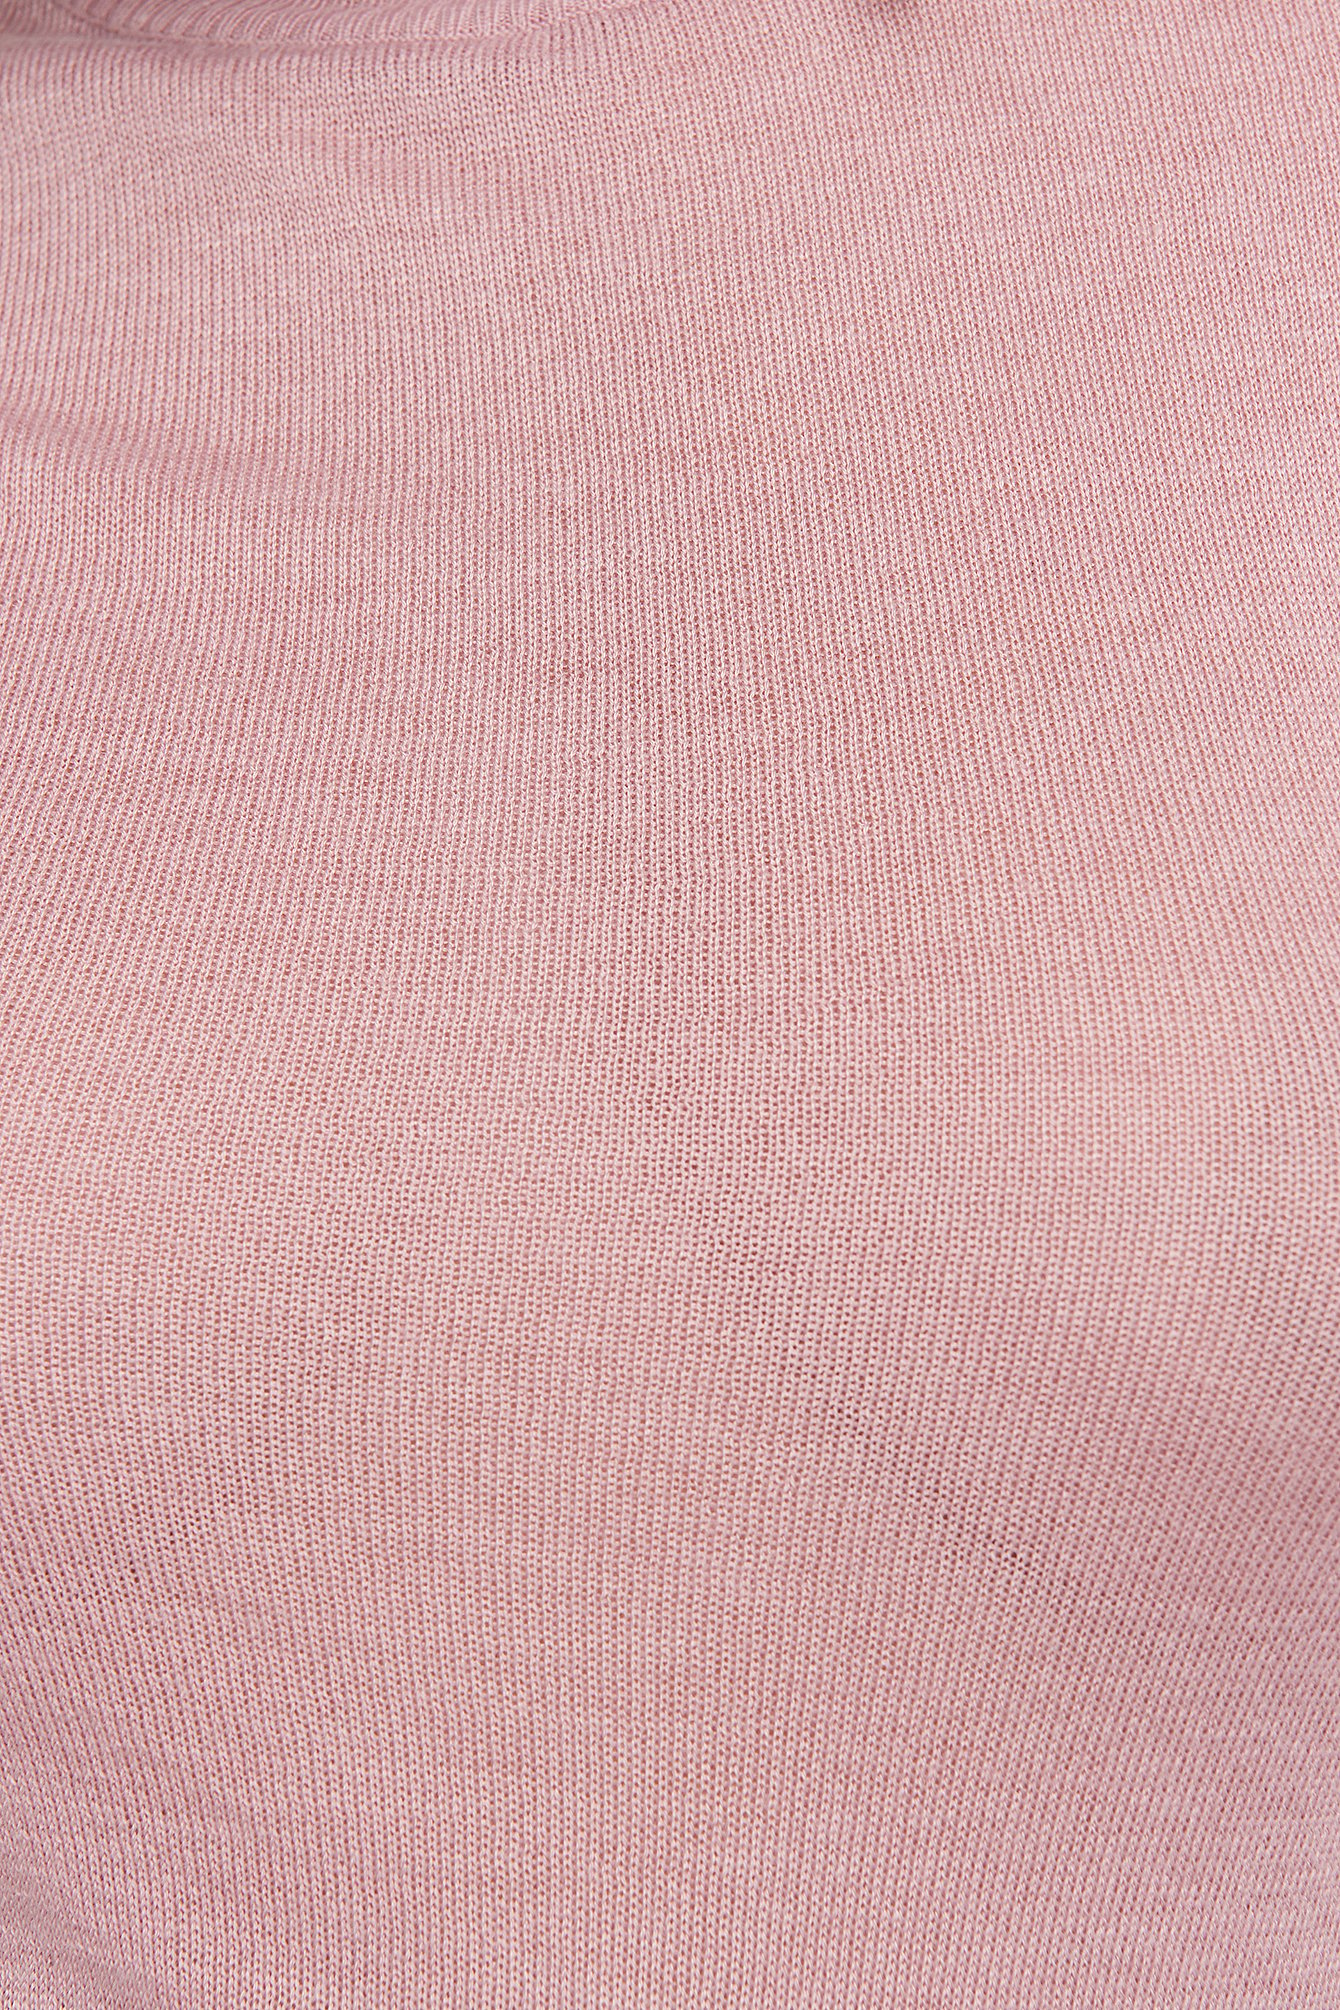 Dusty Pink High Neck Light Knit Sweater